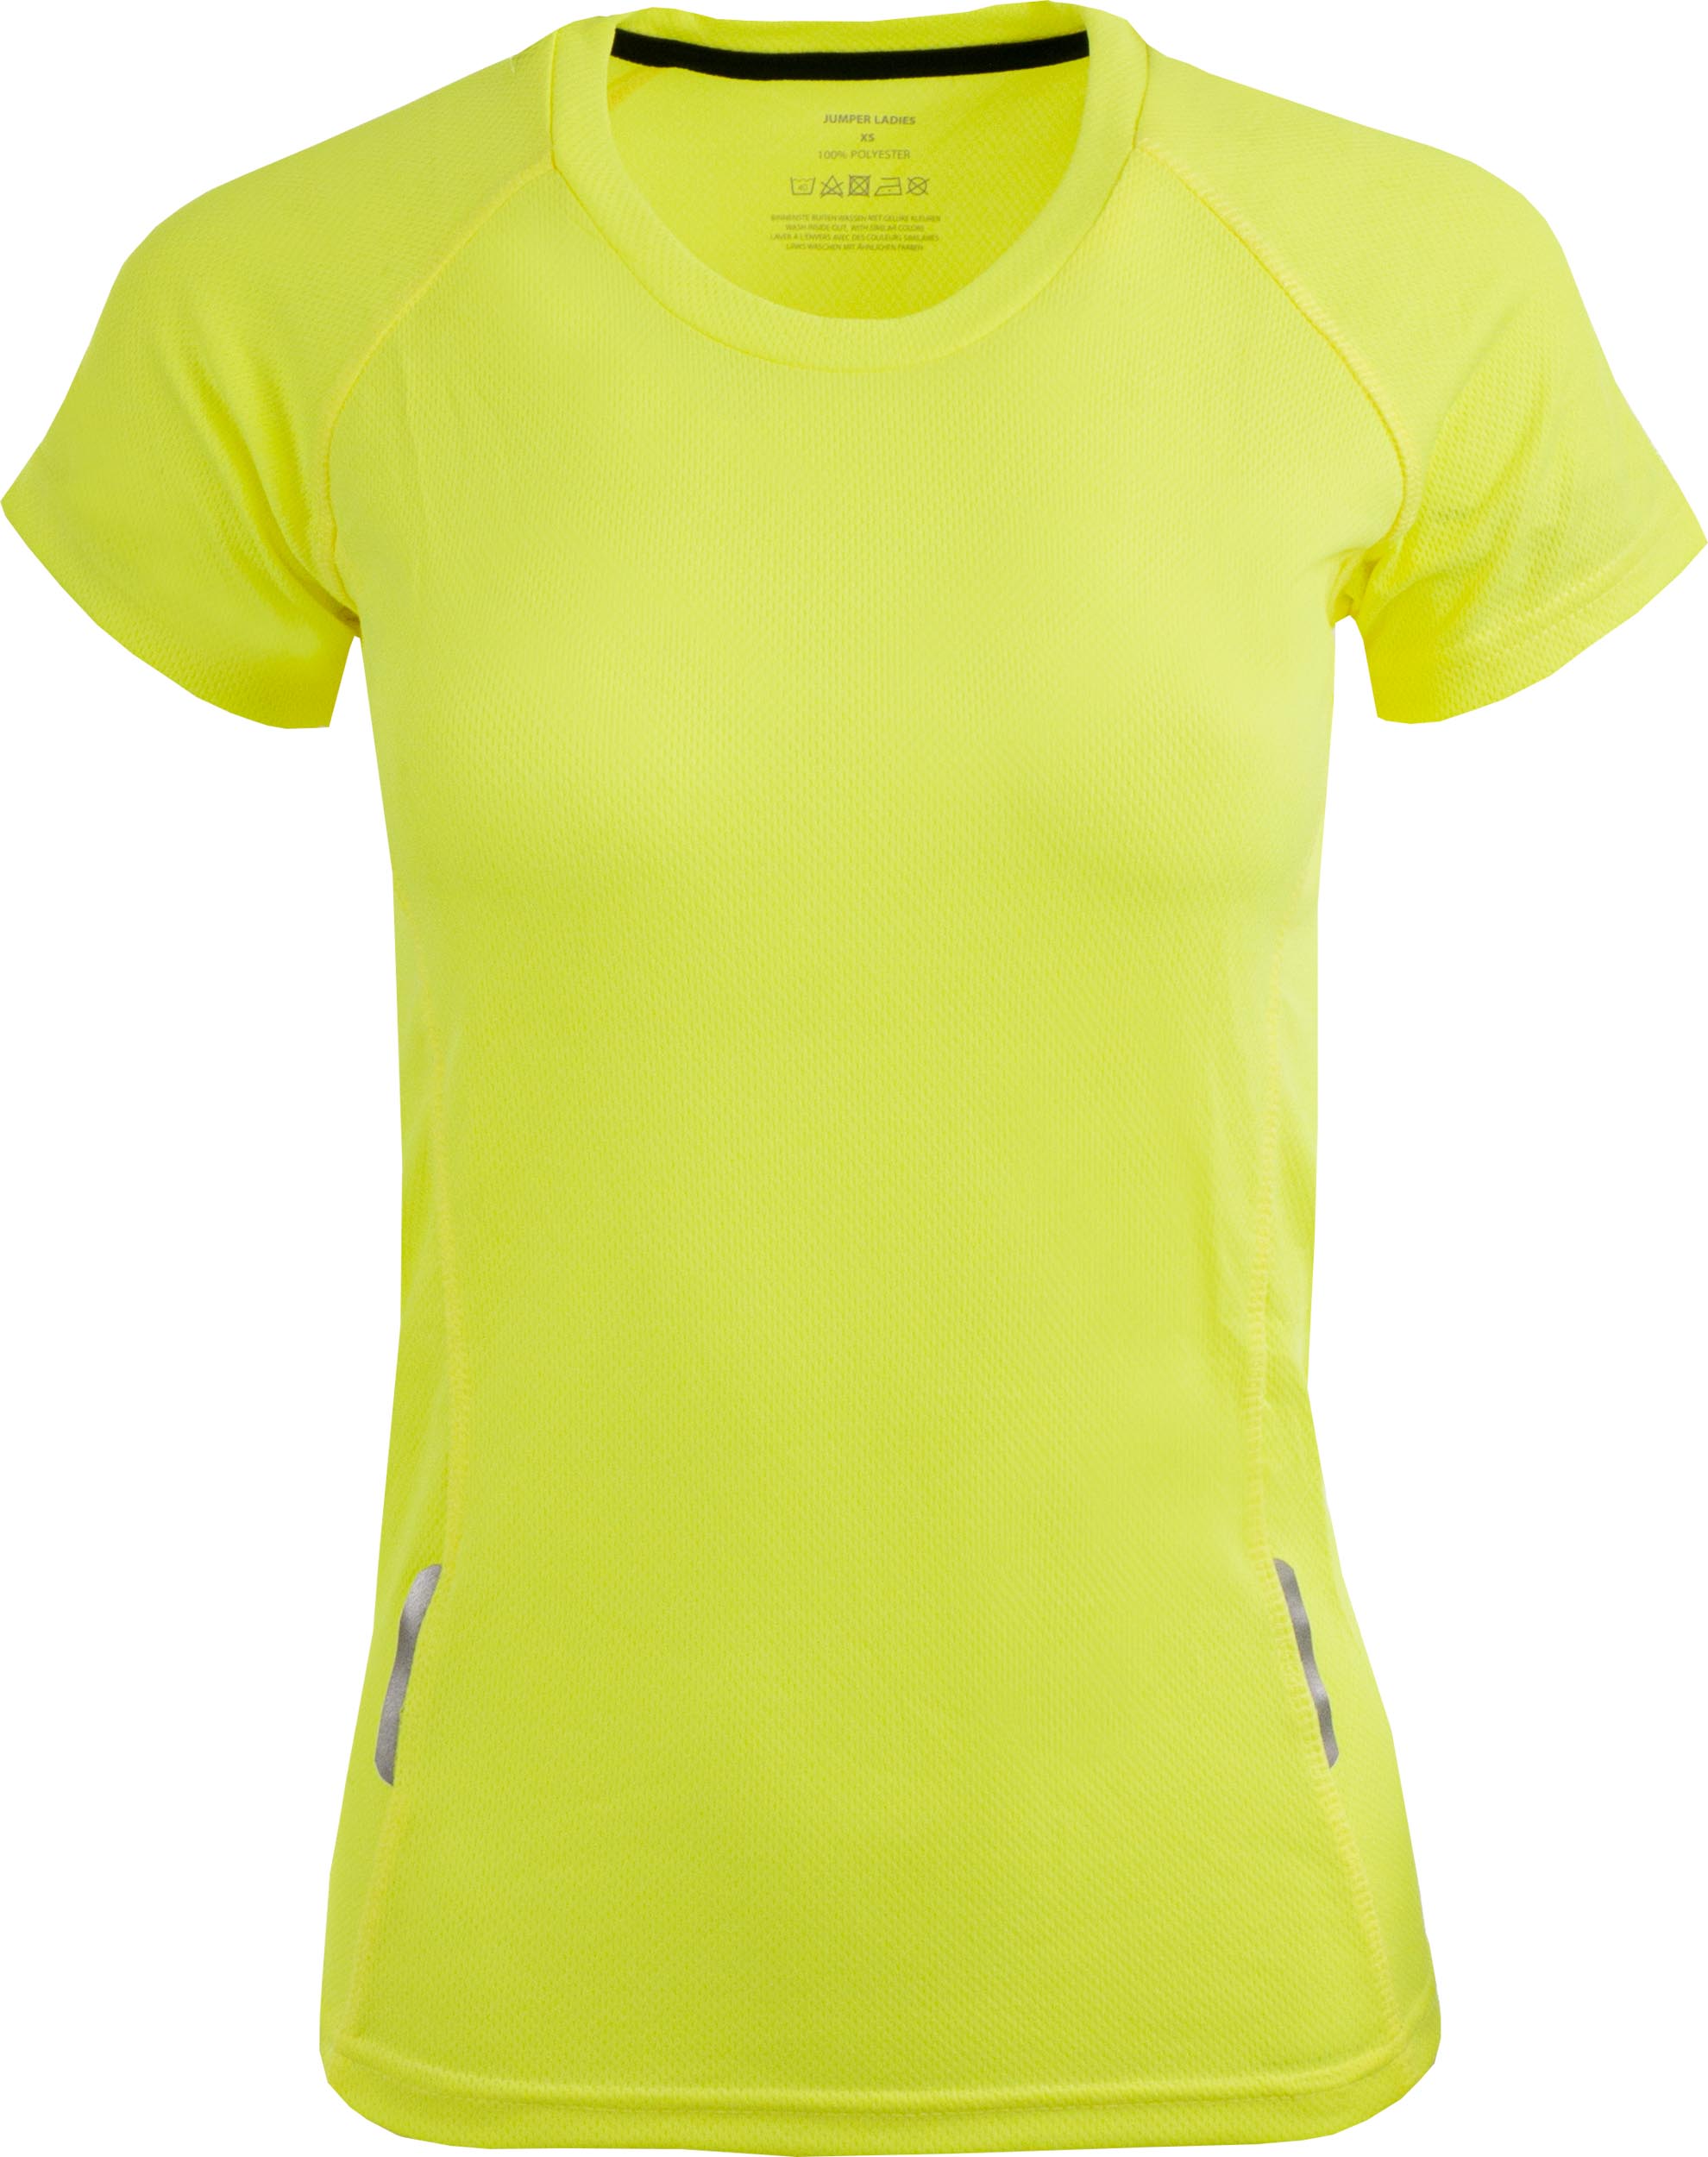 Sportovní triko JUMPER Ladies yellow|M